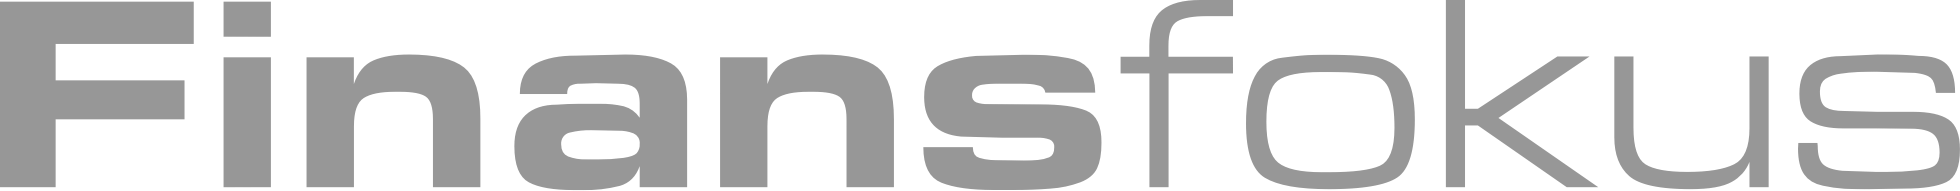 thefactory logo